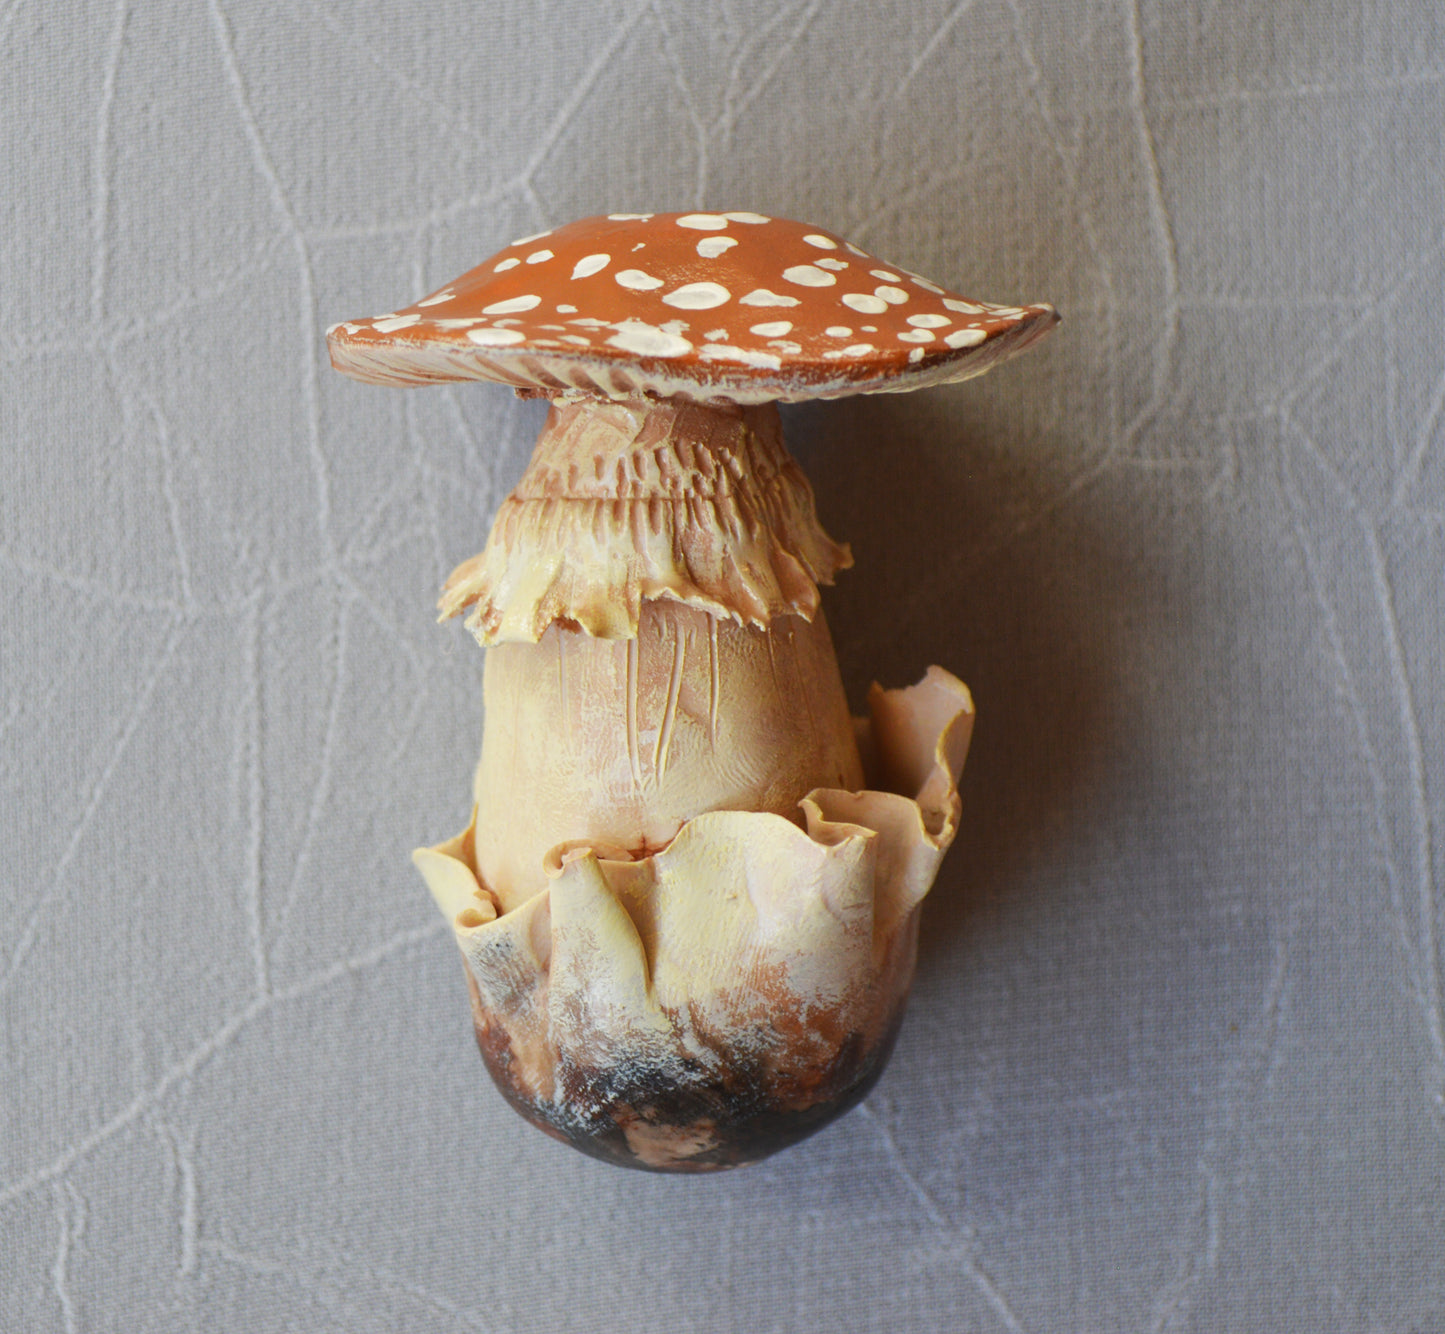 Realistic brown cap mushroom "Amanita Muscaria" decor art object